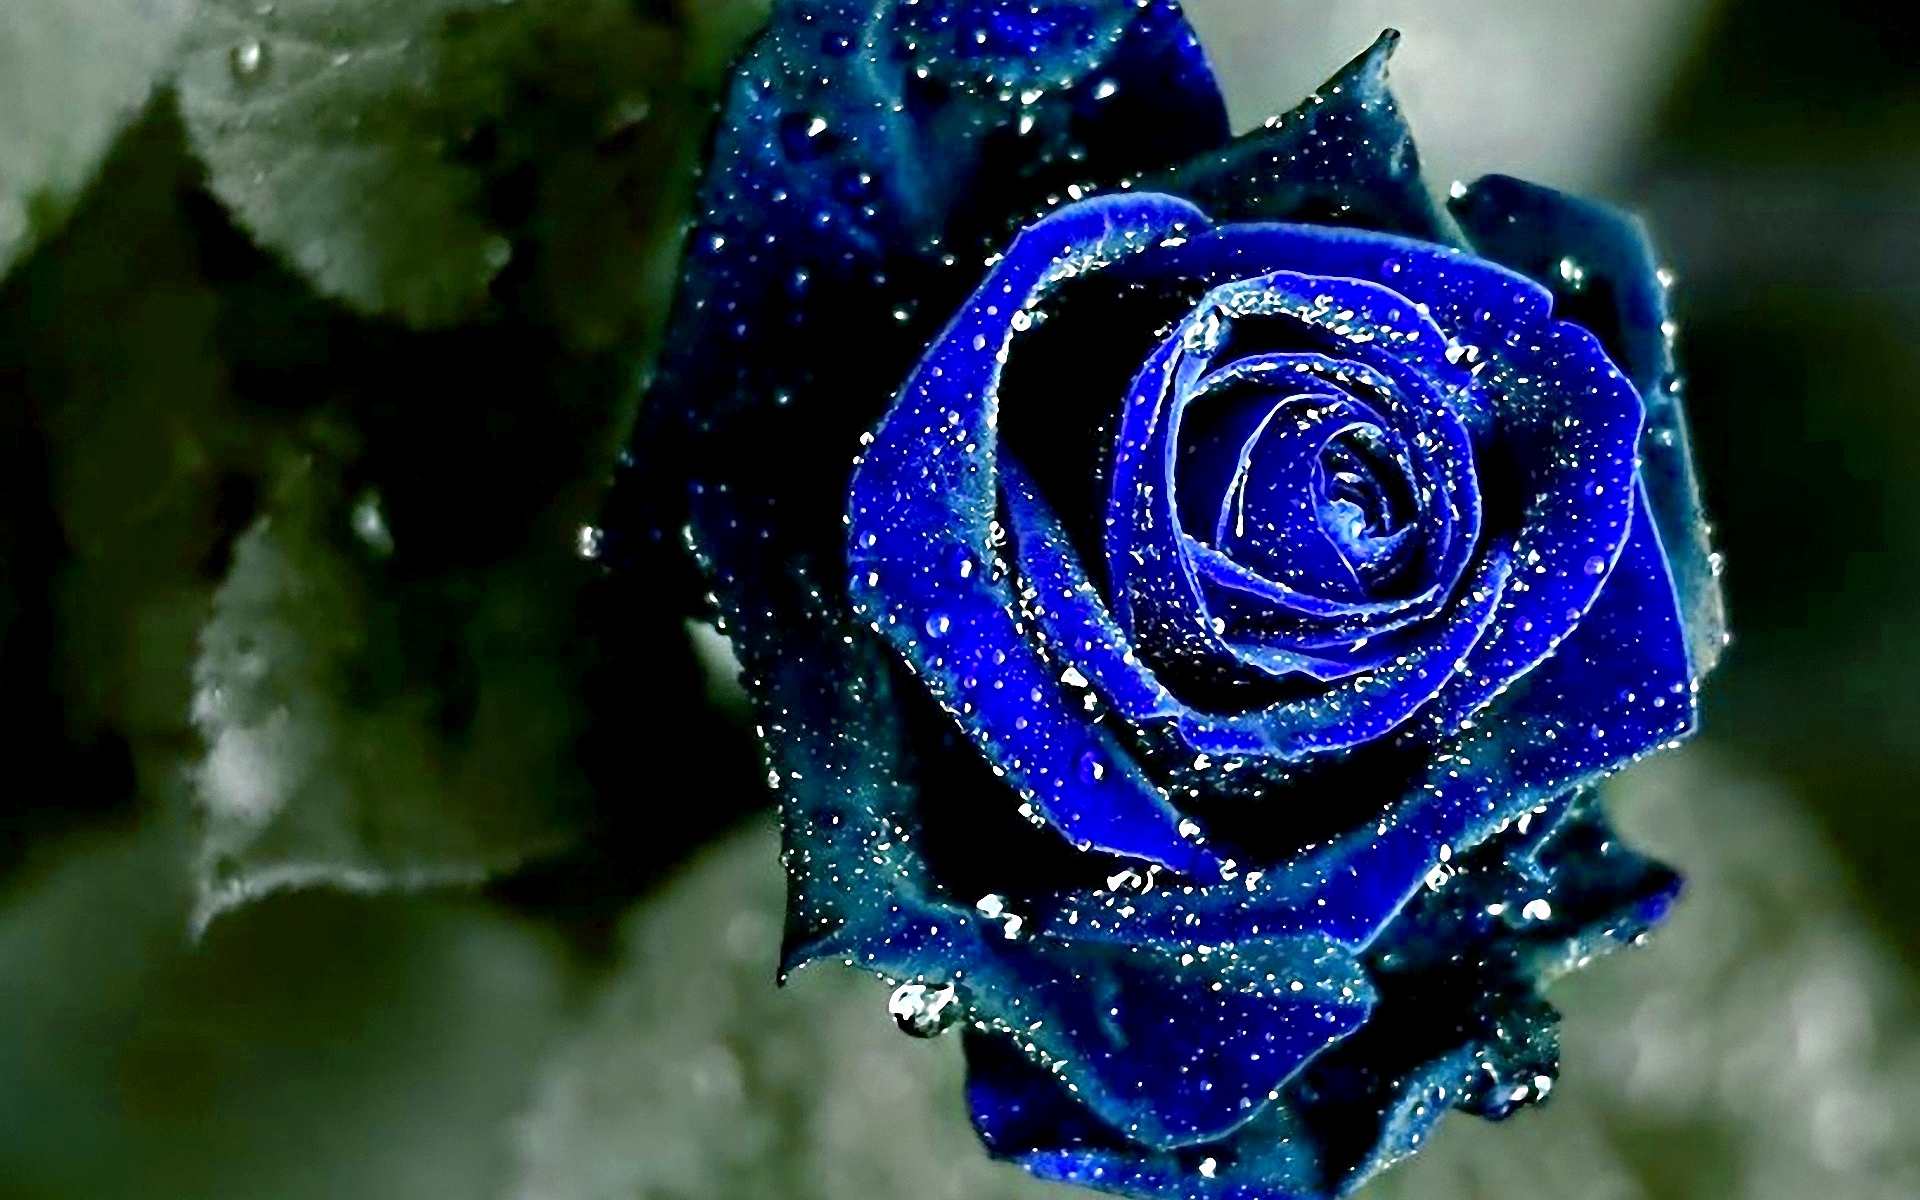 rose wallpaper hd,rose,blue rose,blue,garden roses,water